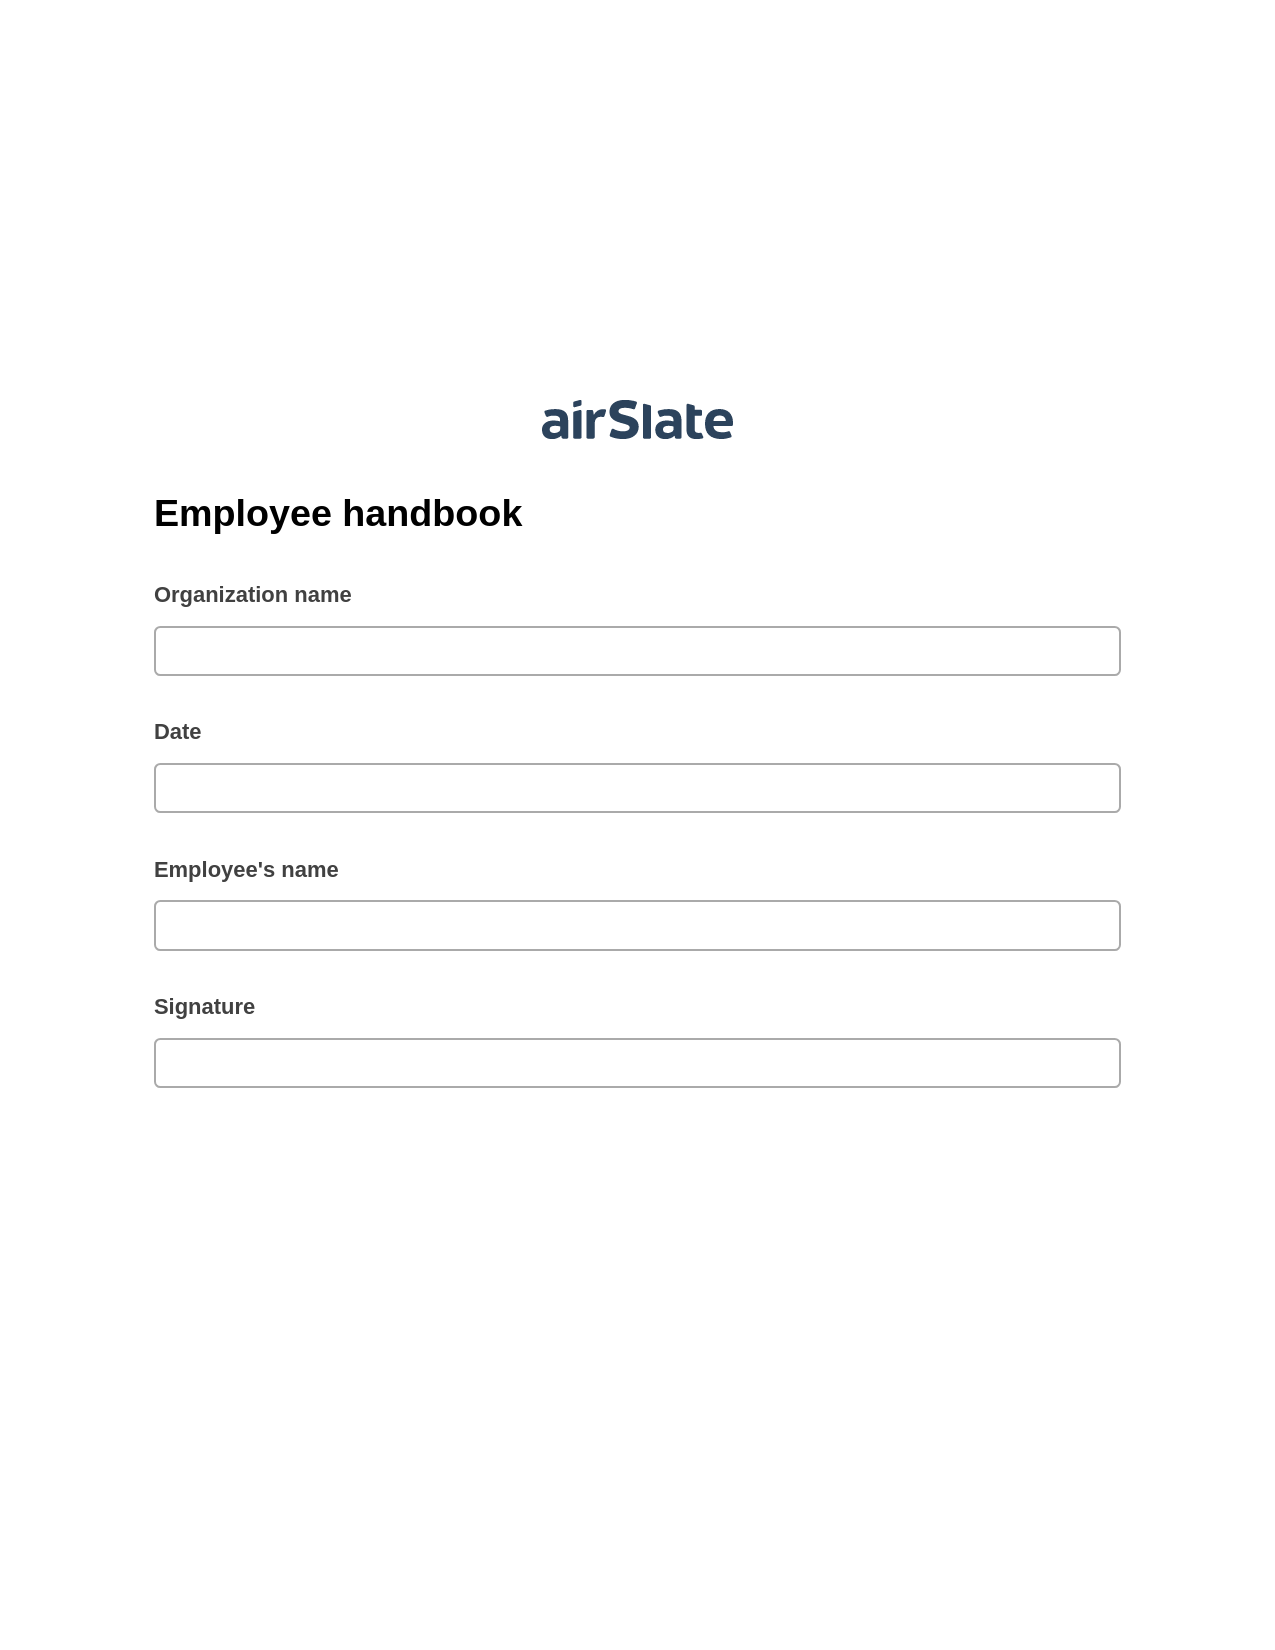 Multirole Employee handbook Pre-fill from another Slate Bot, Create Slate Reminder Bot, Slack Two-Way Binding Bot